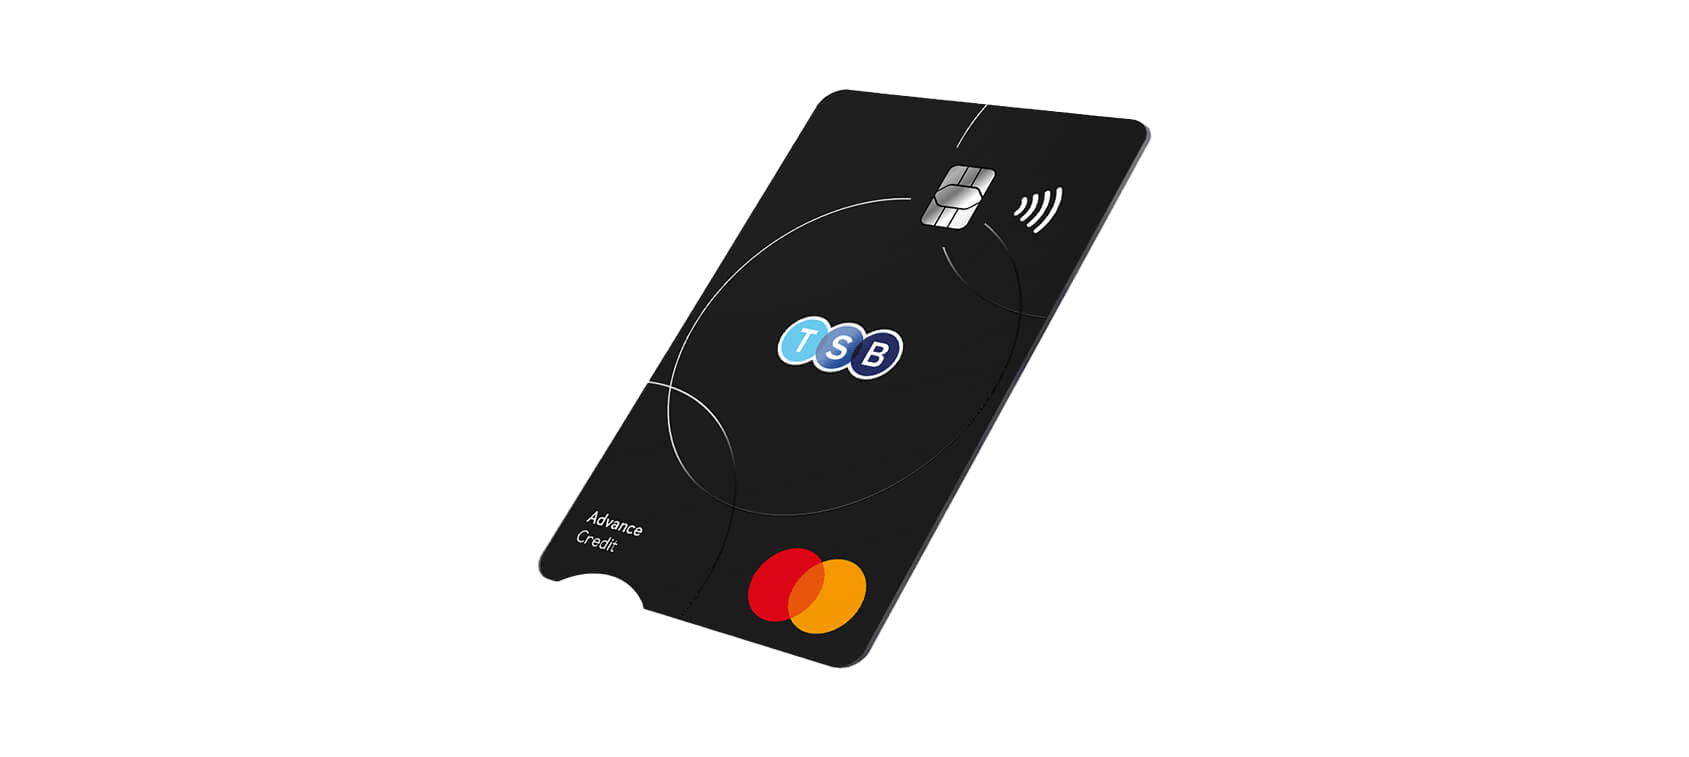 TSB branded black Advanced Credit Card.